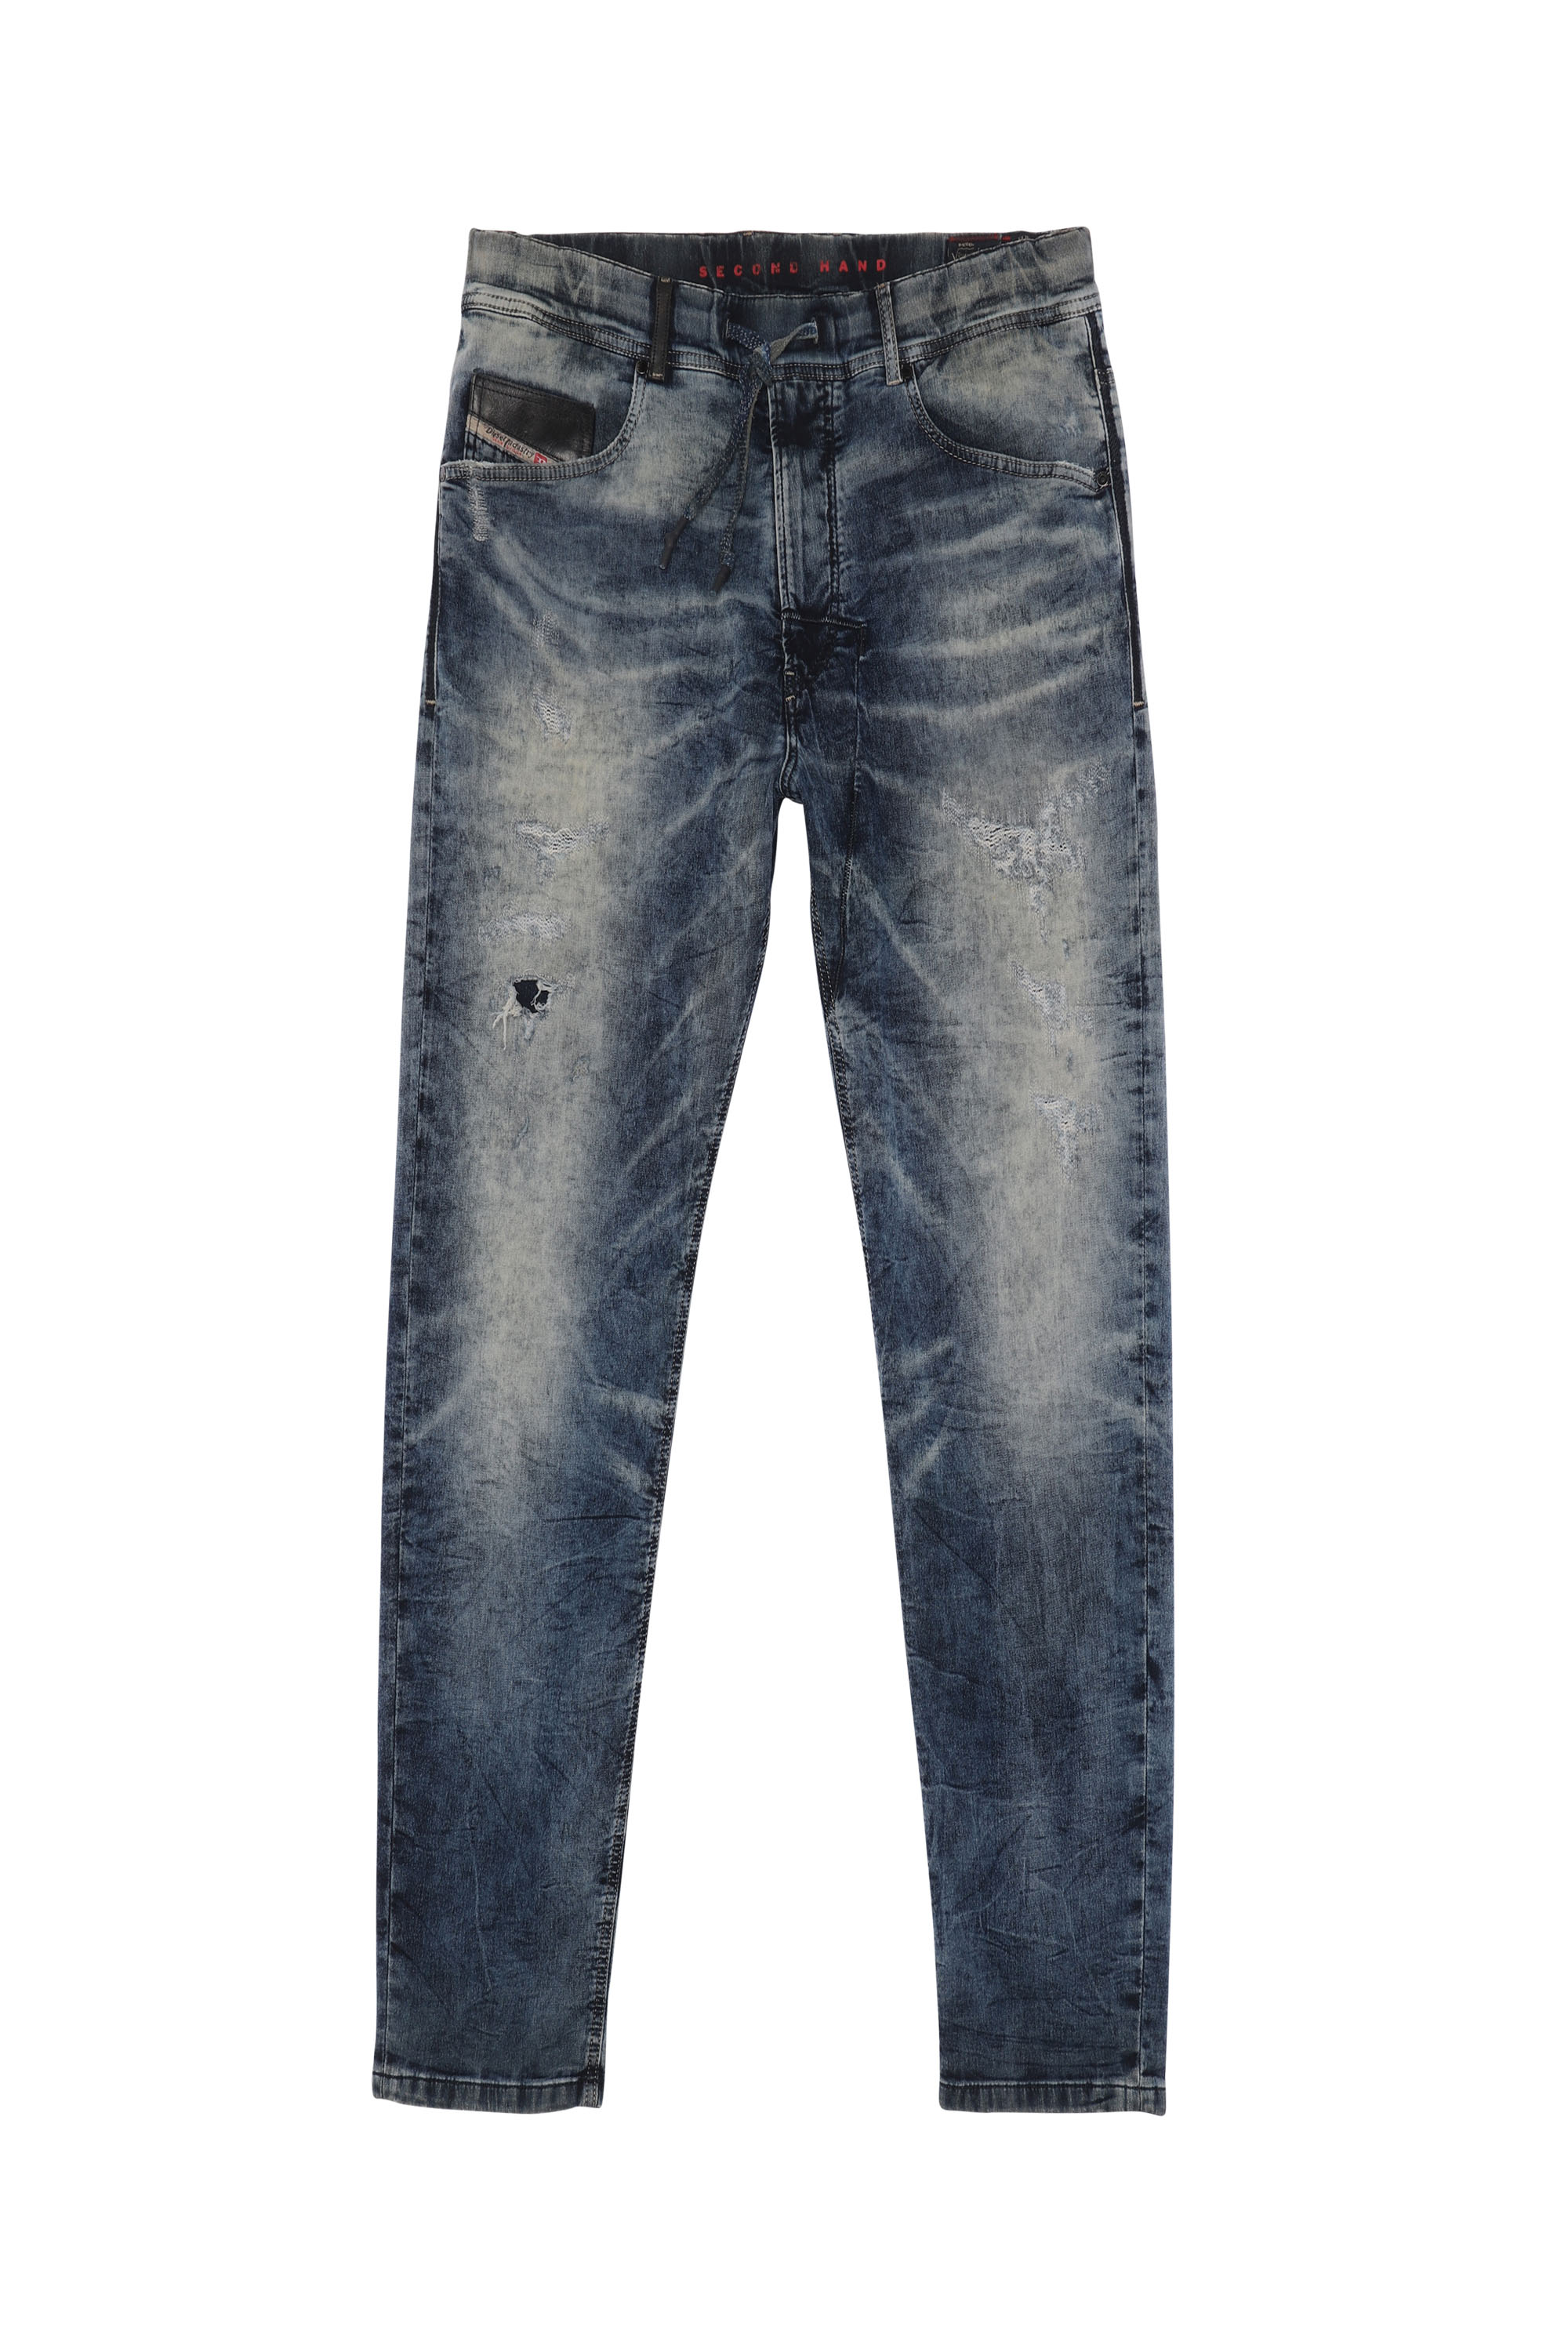 NARROT JoggJeans®, Bleu Foncé - Jeans